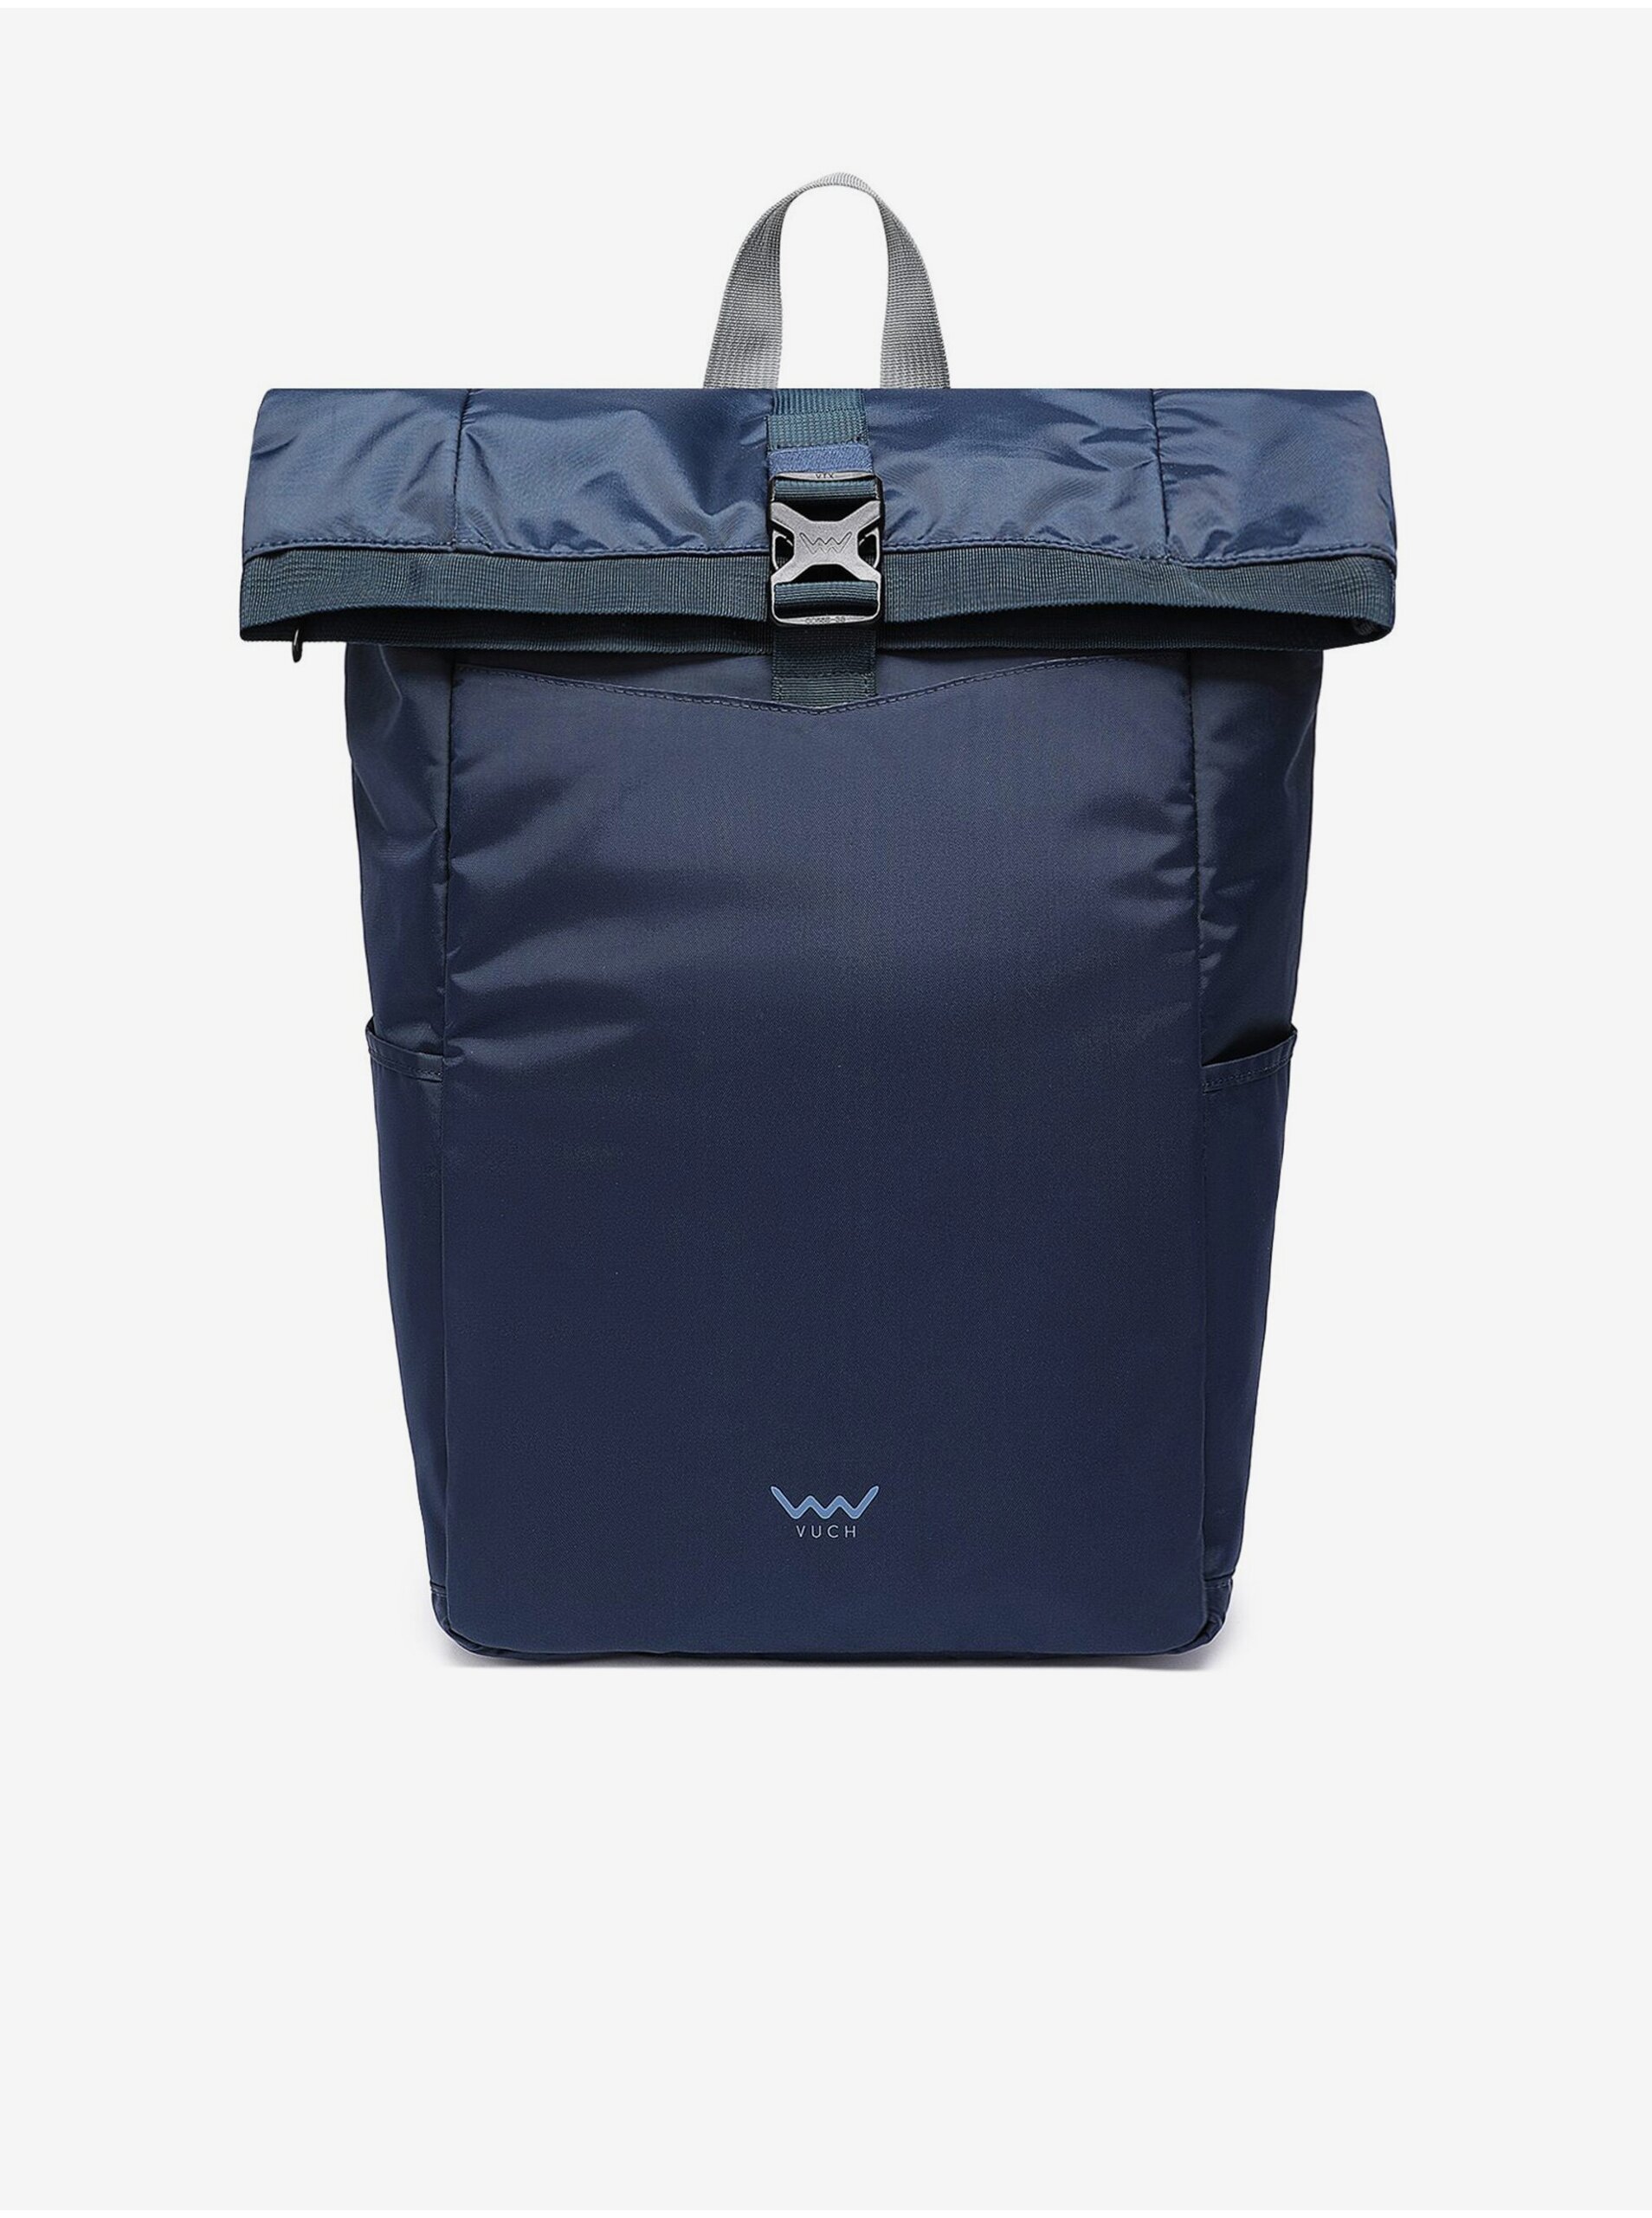 E-shop Tmavě modrý pánský sportovní batoh VUCH Sirius Men